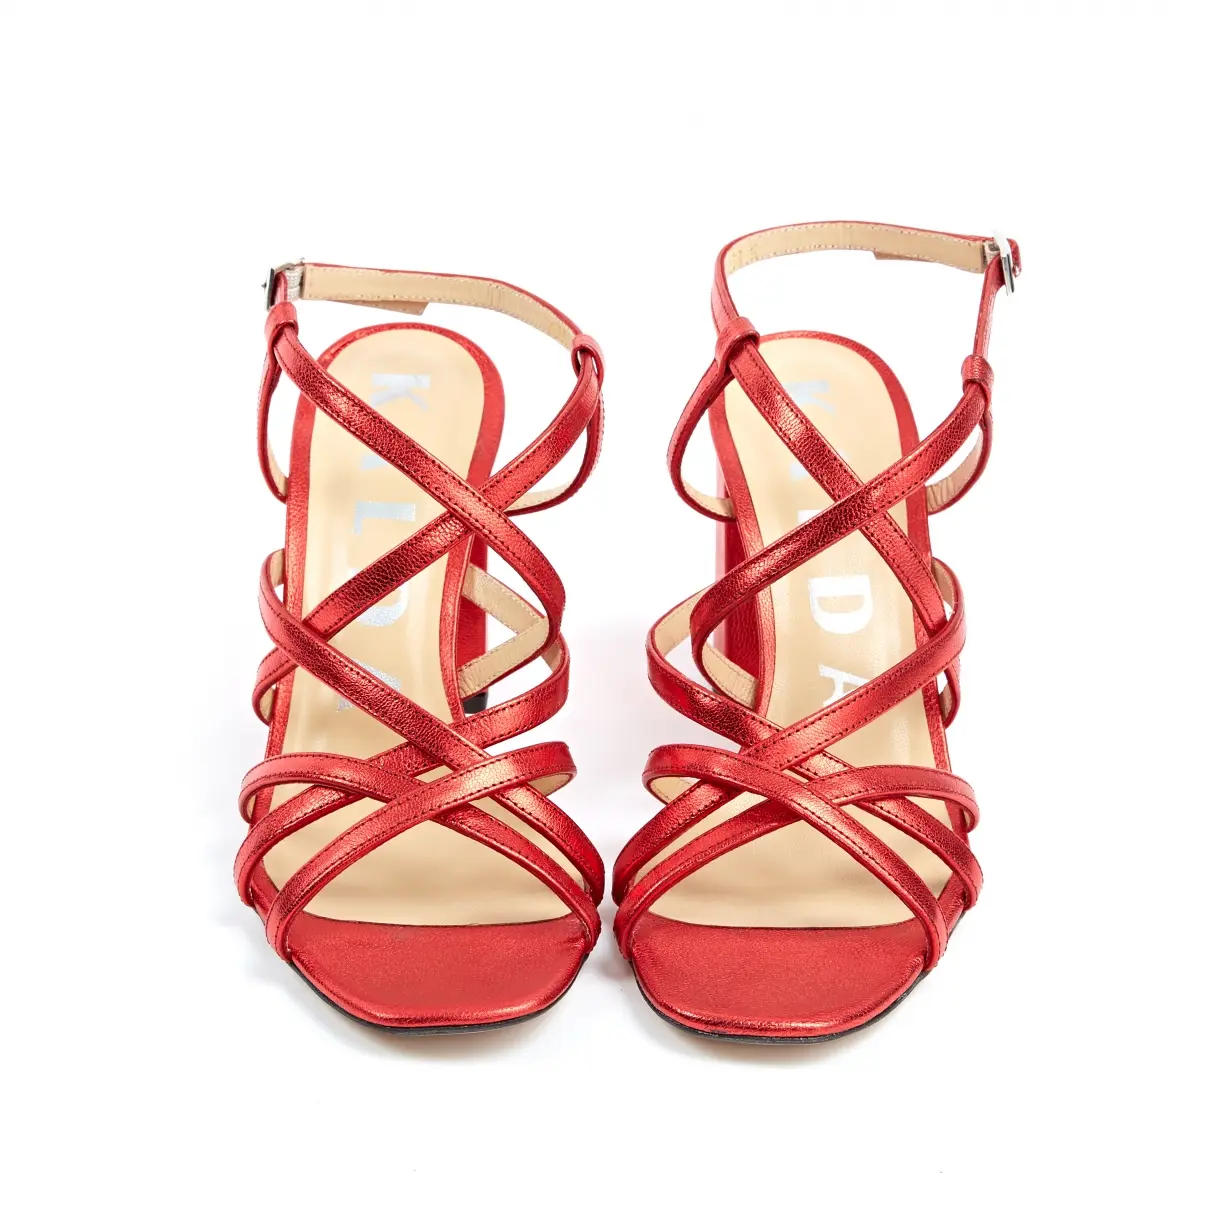 Buy Kalda Leather heels online